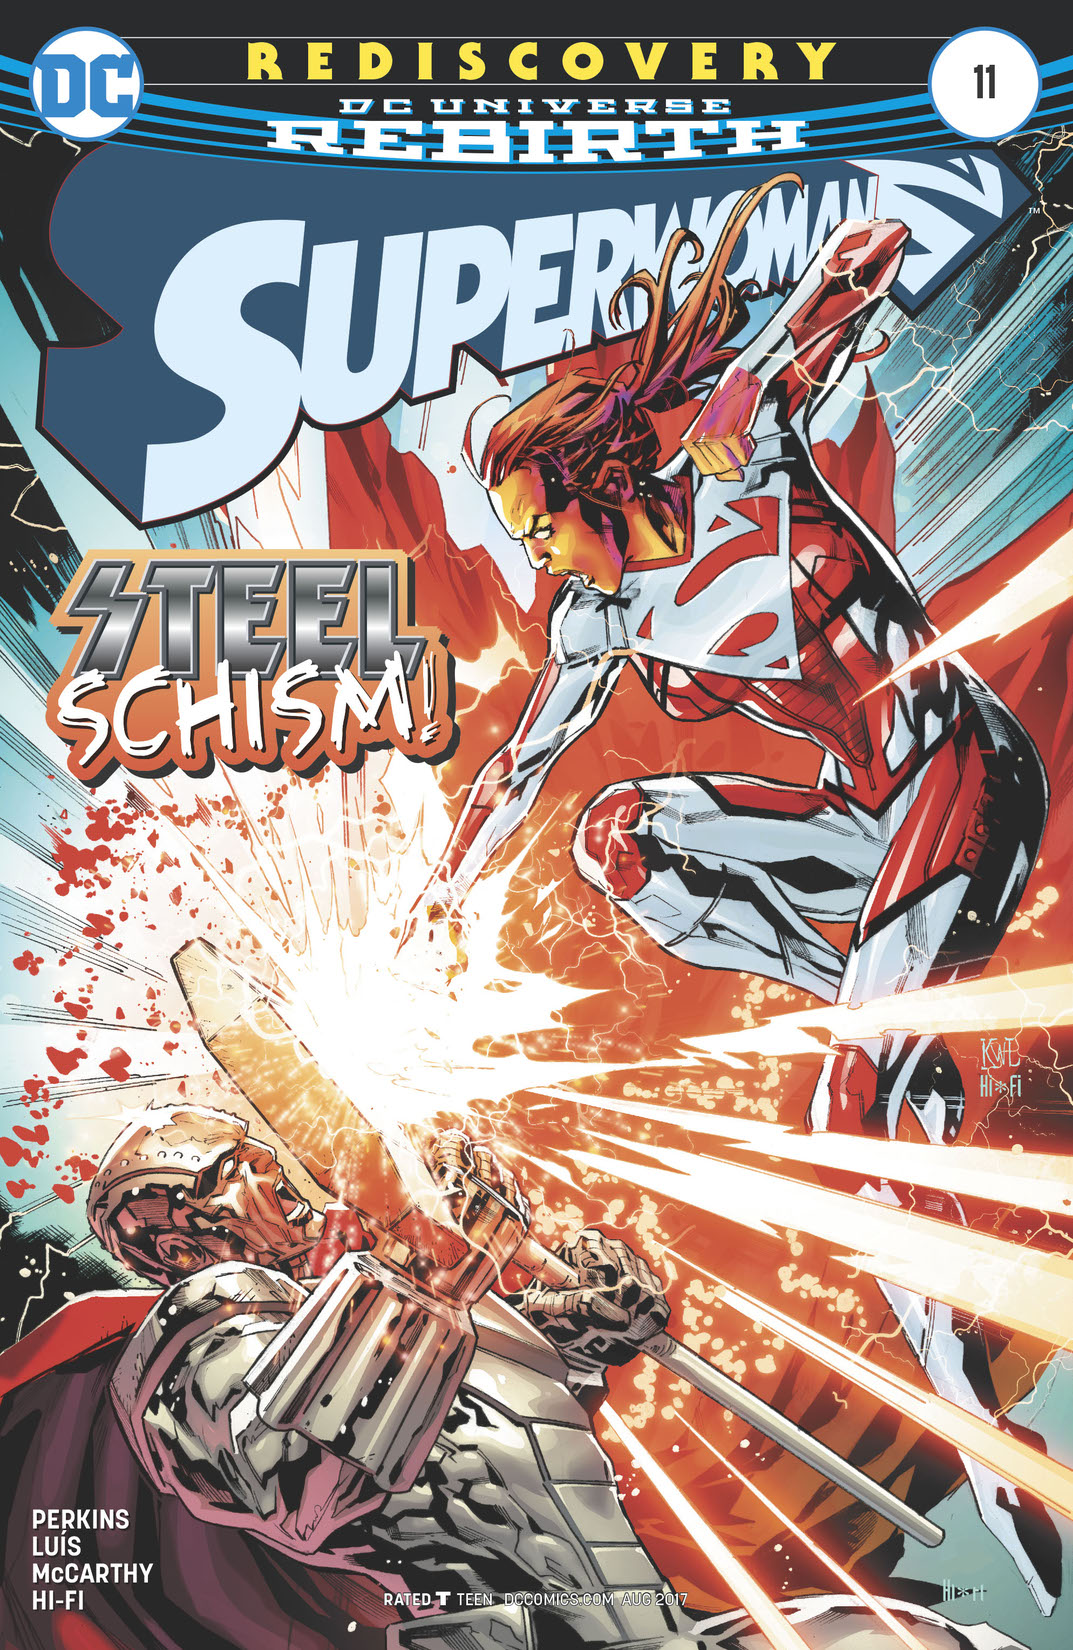 Superwoman #11 preview images